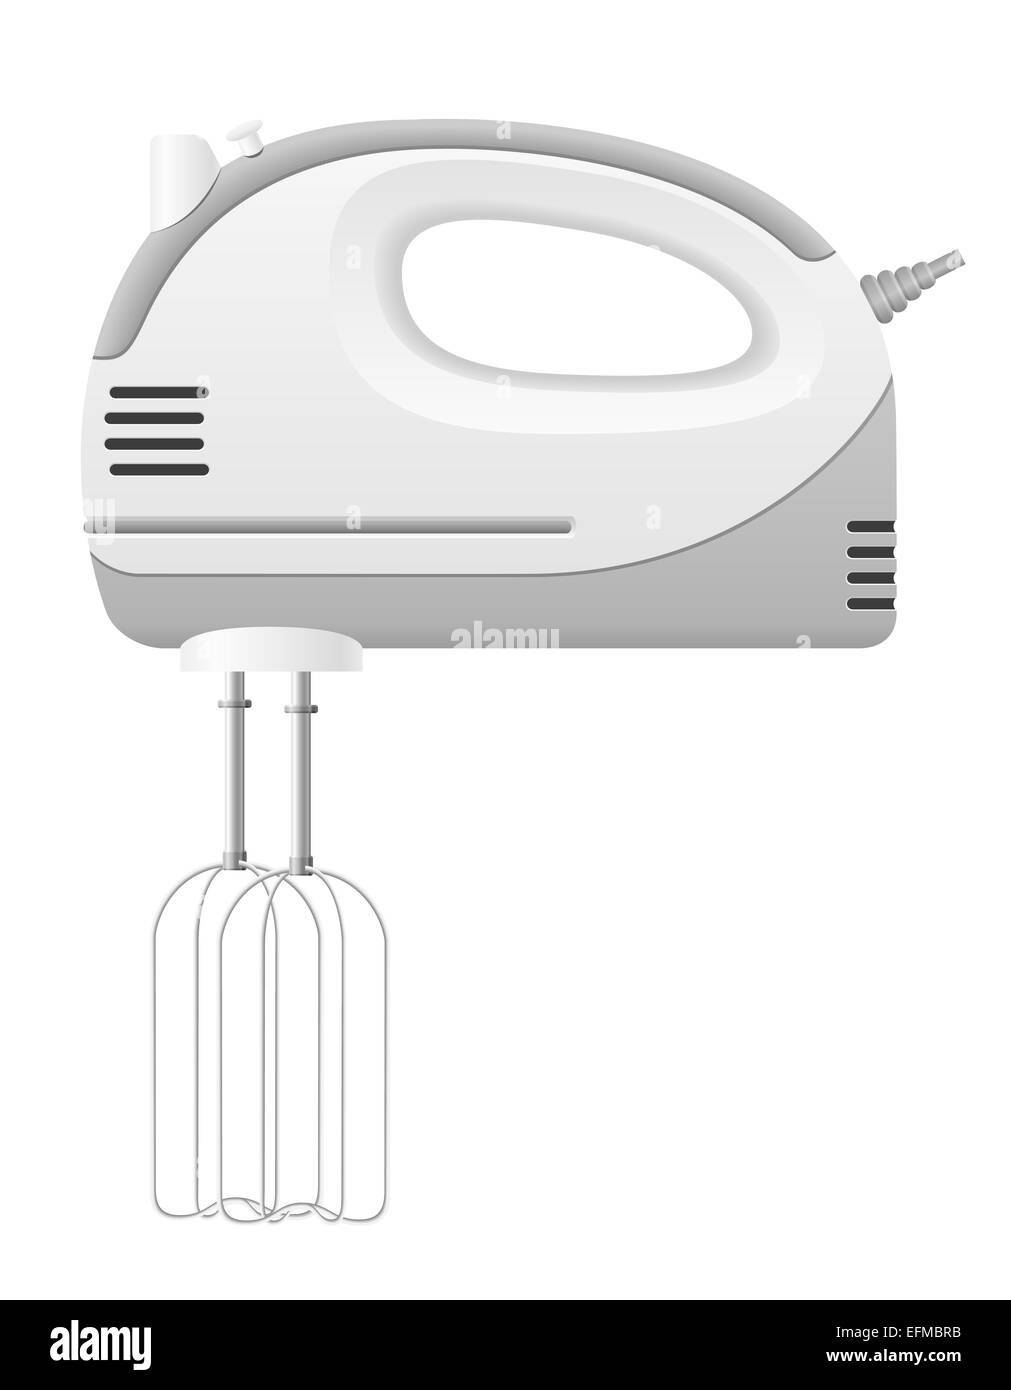 https://c8.alamy.com/comp/EFMBRB/kitchen-mixer-illustration-isolated-on-white-background-EFMBRB.jpg